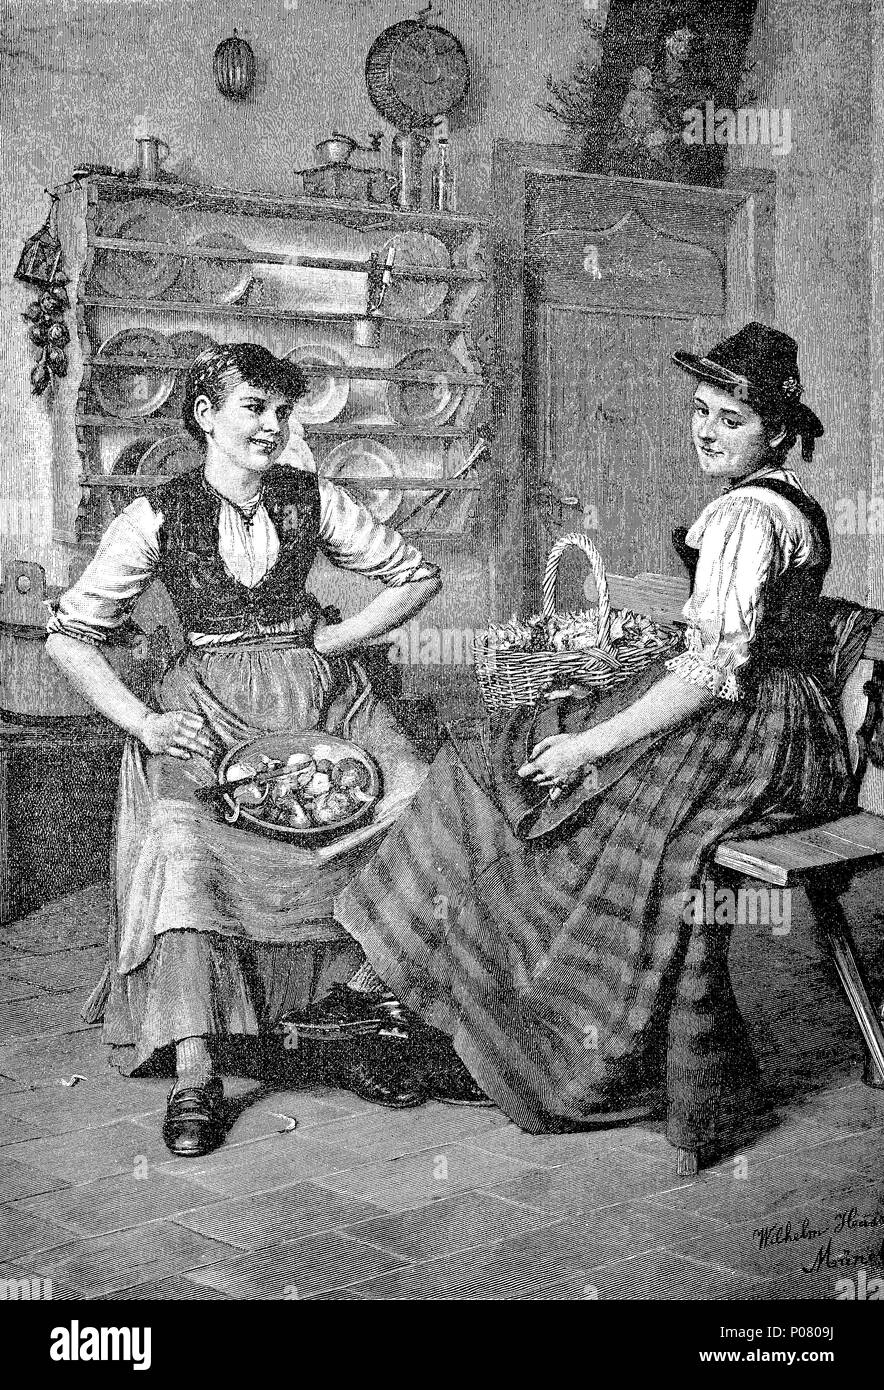 two women at the kitchen work, cleaning vegetables, Zwei Frauen bei der KÃ¼chenarbeit, GemÃ¼se putzen, digital improved reproduction of an original print from the year 1881 Stock Photo